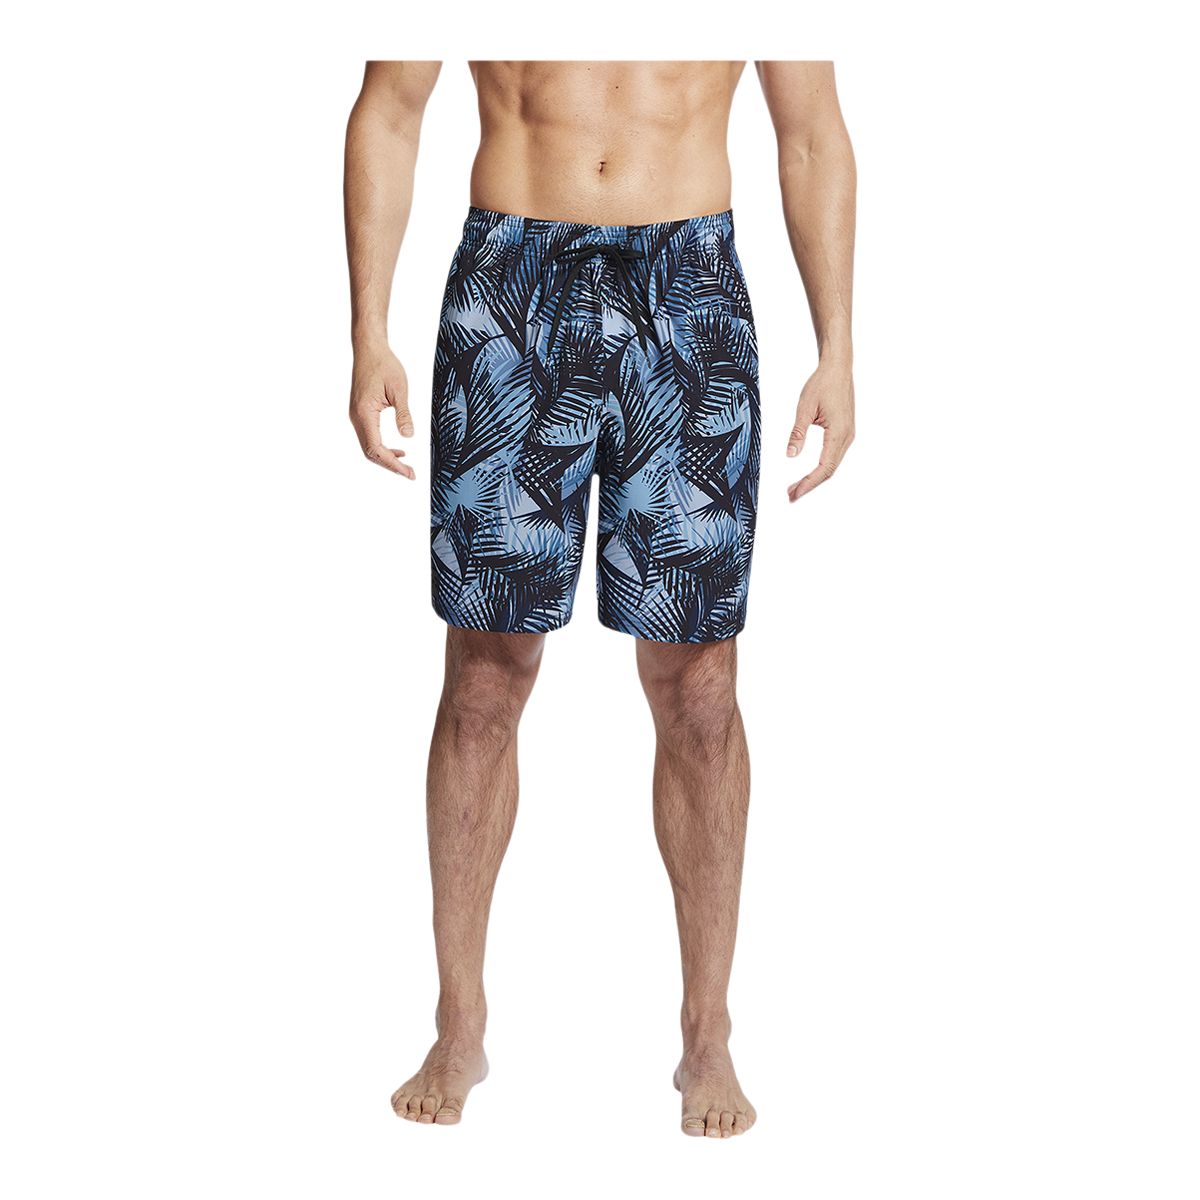 Under Armour Men's Graphic Palms Swim Shorts